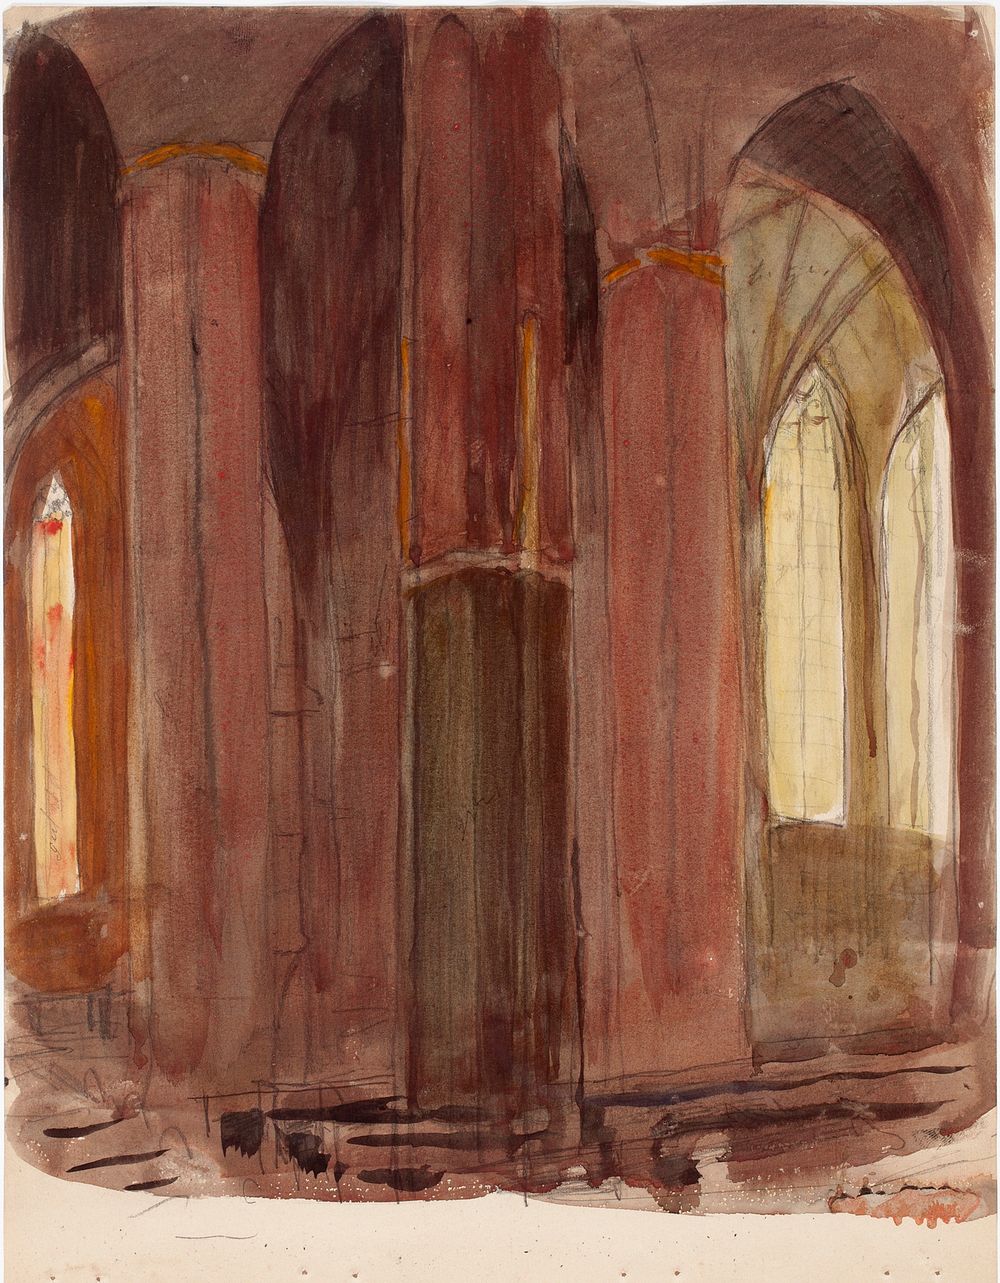 Katedraali, sisäkuva, 1894 - 1895part of a sketchbook, by Magnus Enckell